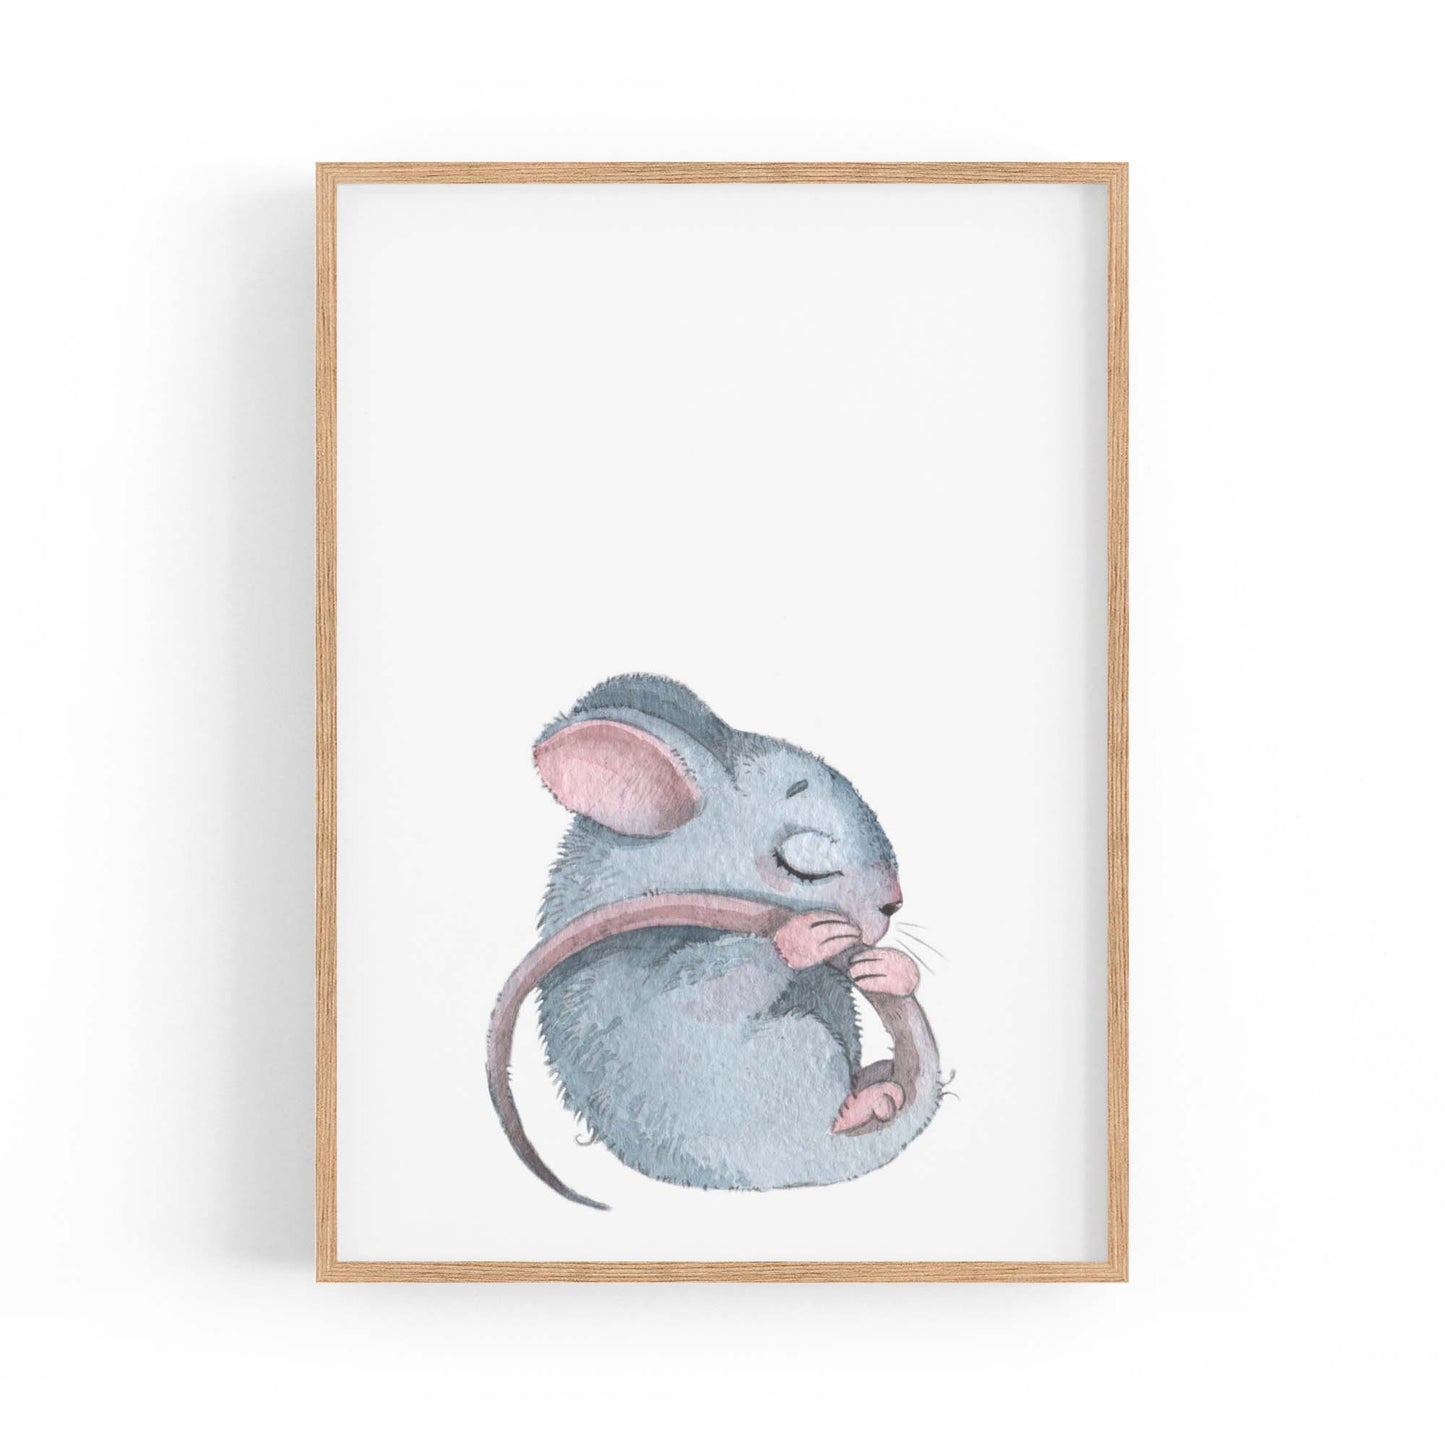 Sleeping Mouse Cartoon Animal Nursery Wall Art #1 - The Affordable Art Company